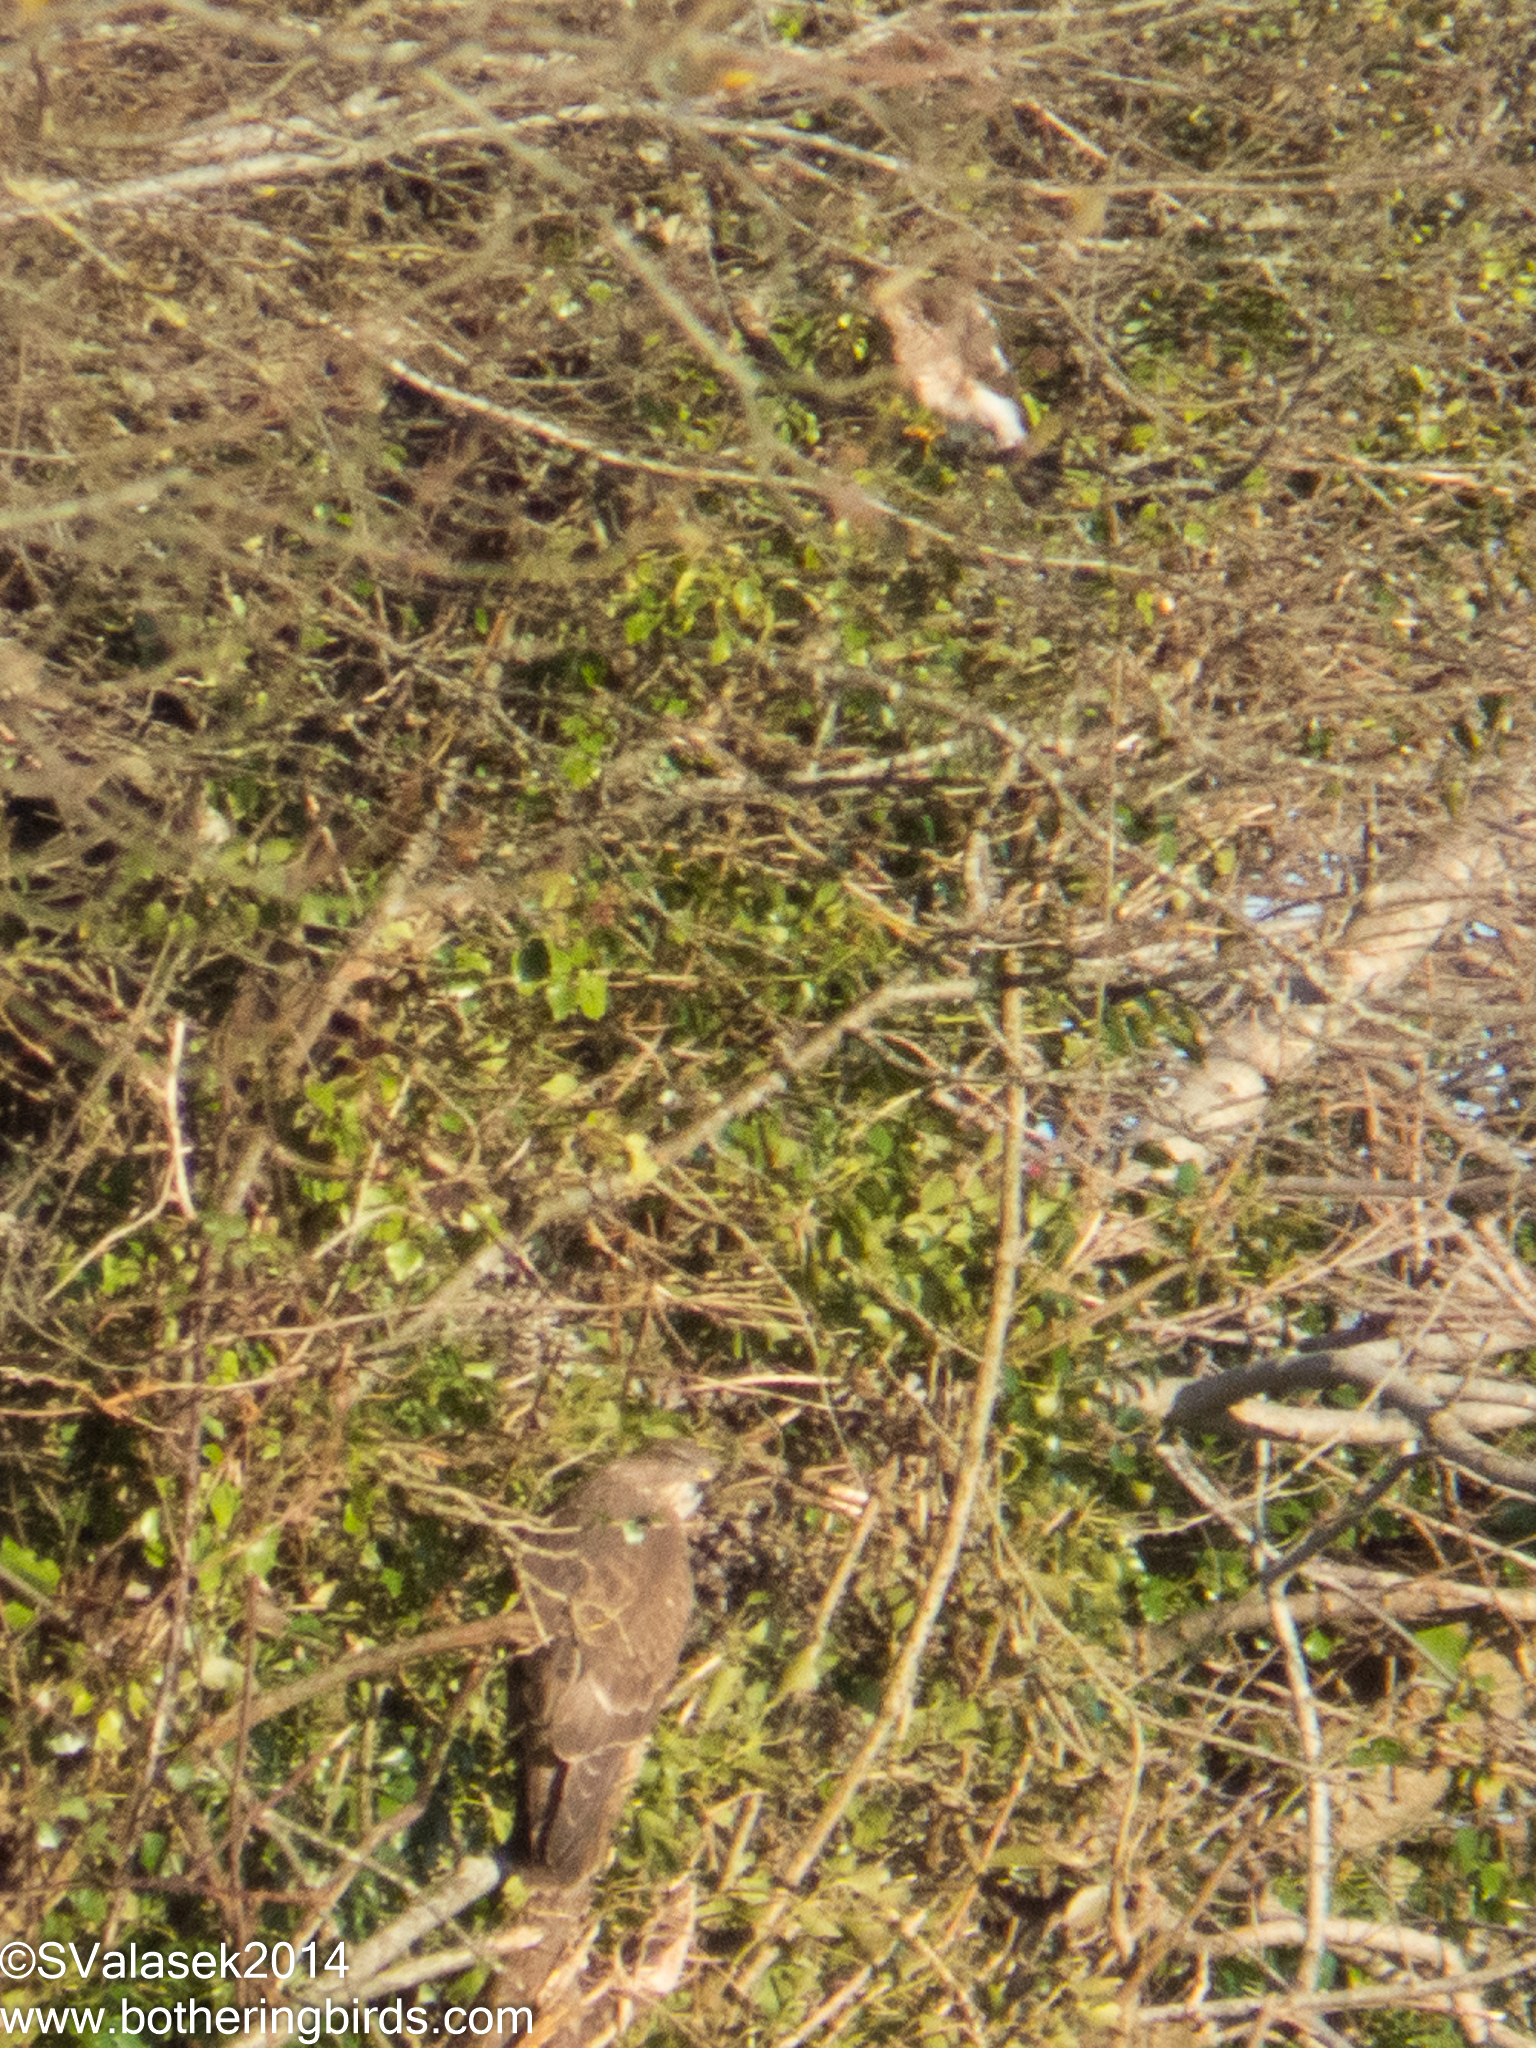 Common Buzzard (below) and Sparrowhawk (above)